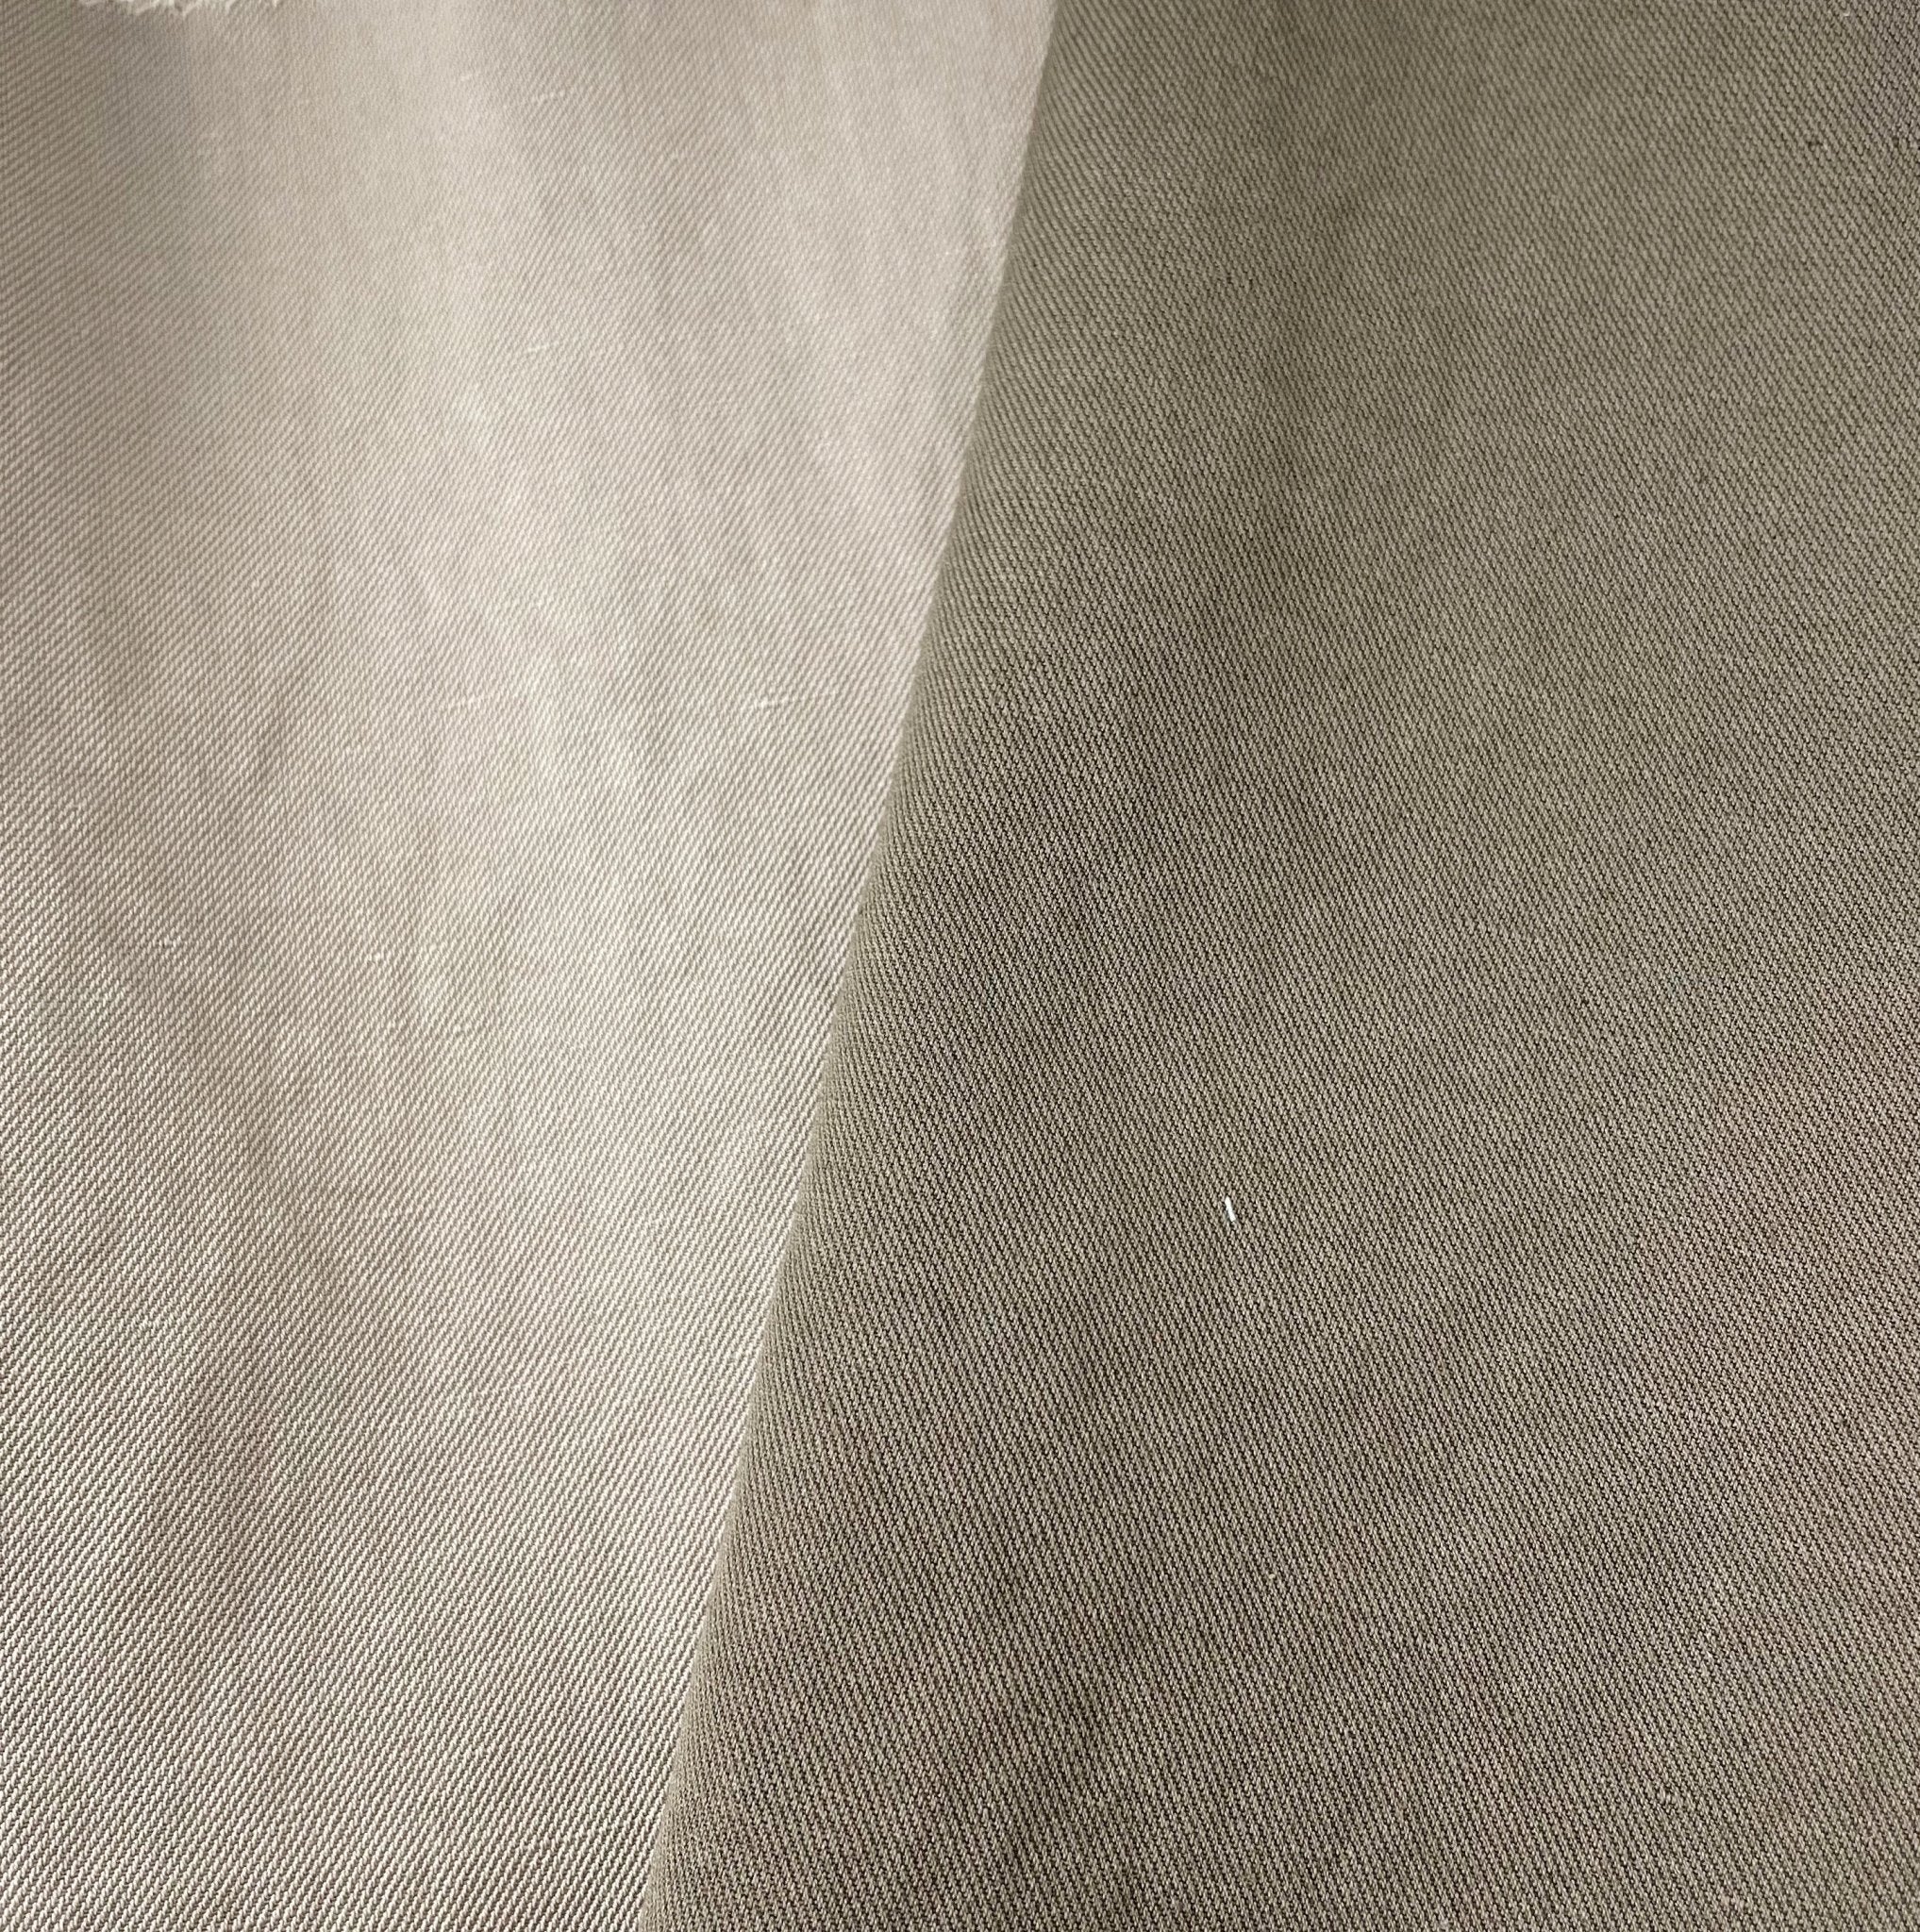 Linen Cotton Twill Fabric 7157 6943 - The Linen Lab - 7157 BEIGE